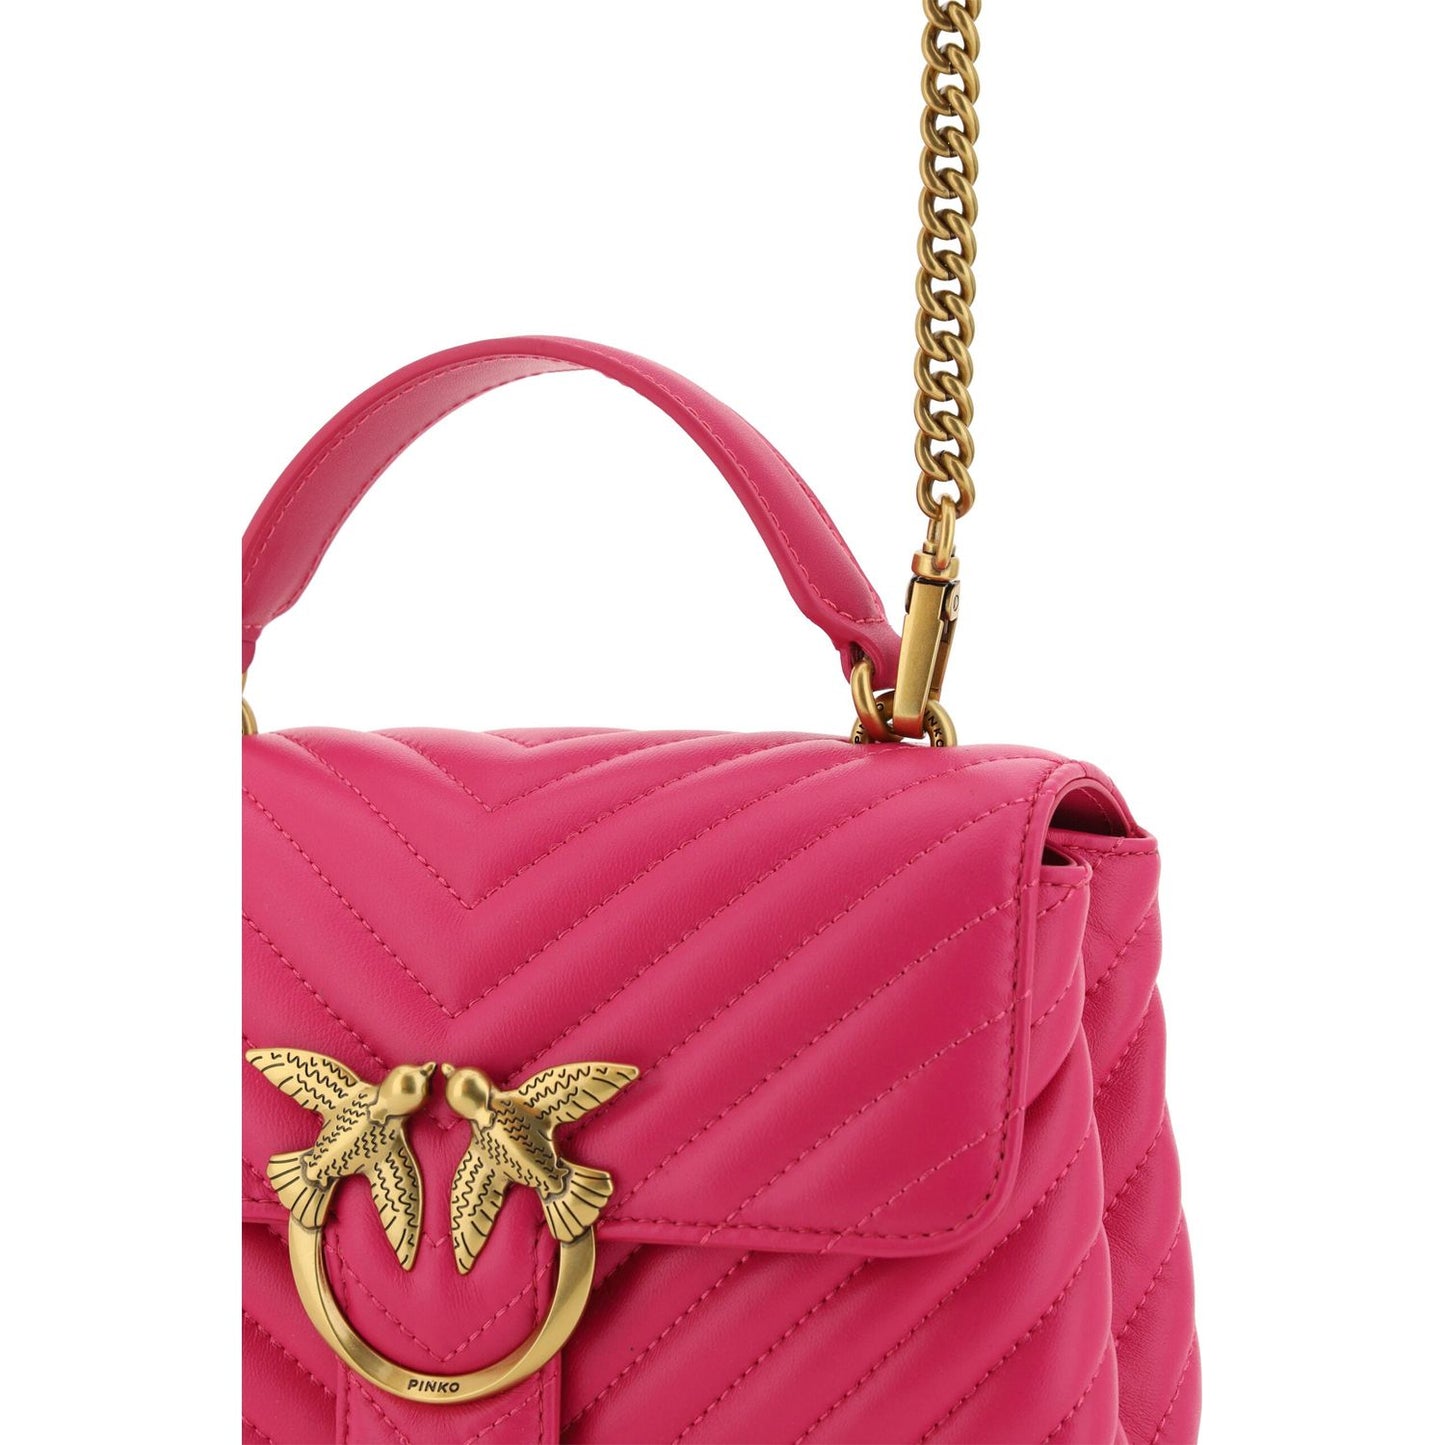 PINKO Chic Pink Quilted Leather Mini Handbag pink-calf-leather-love-lady-mini-handbag-1 DA379690-3F0C-43EC-87EB-6B116B5AADC7-scaled-f2289948-2b2.jpg